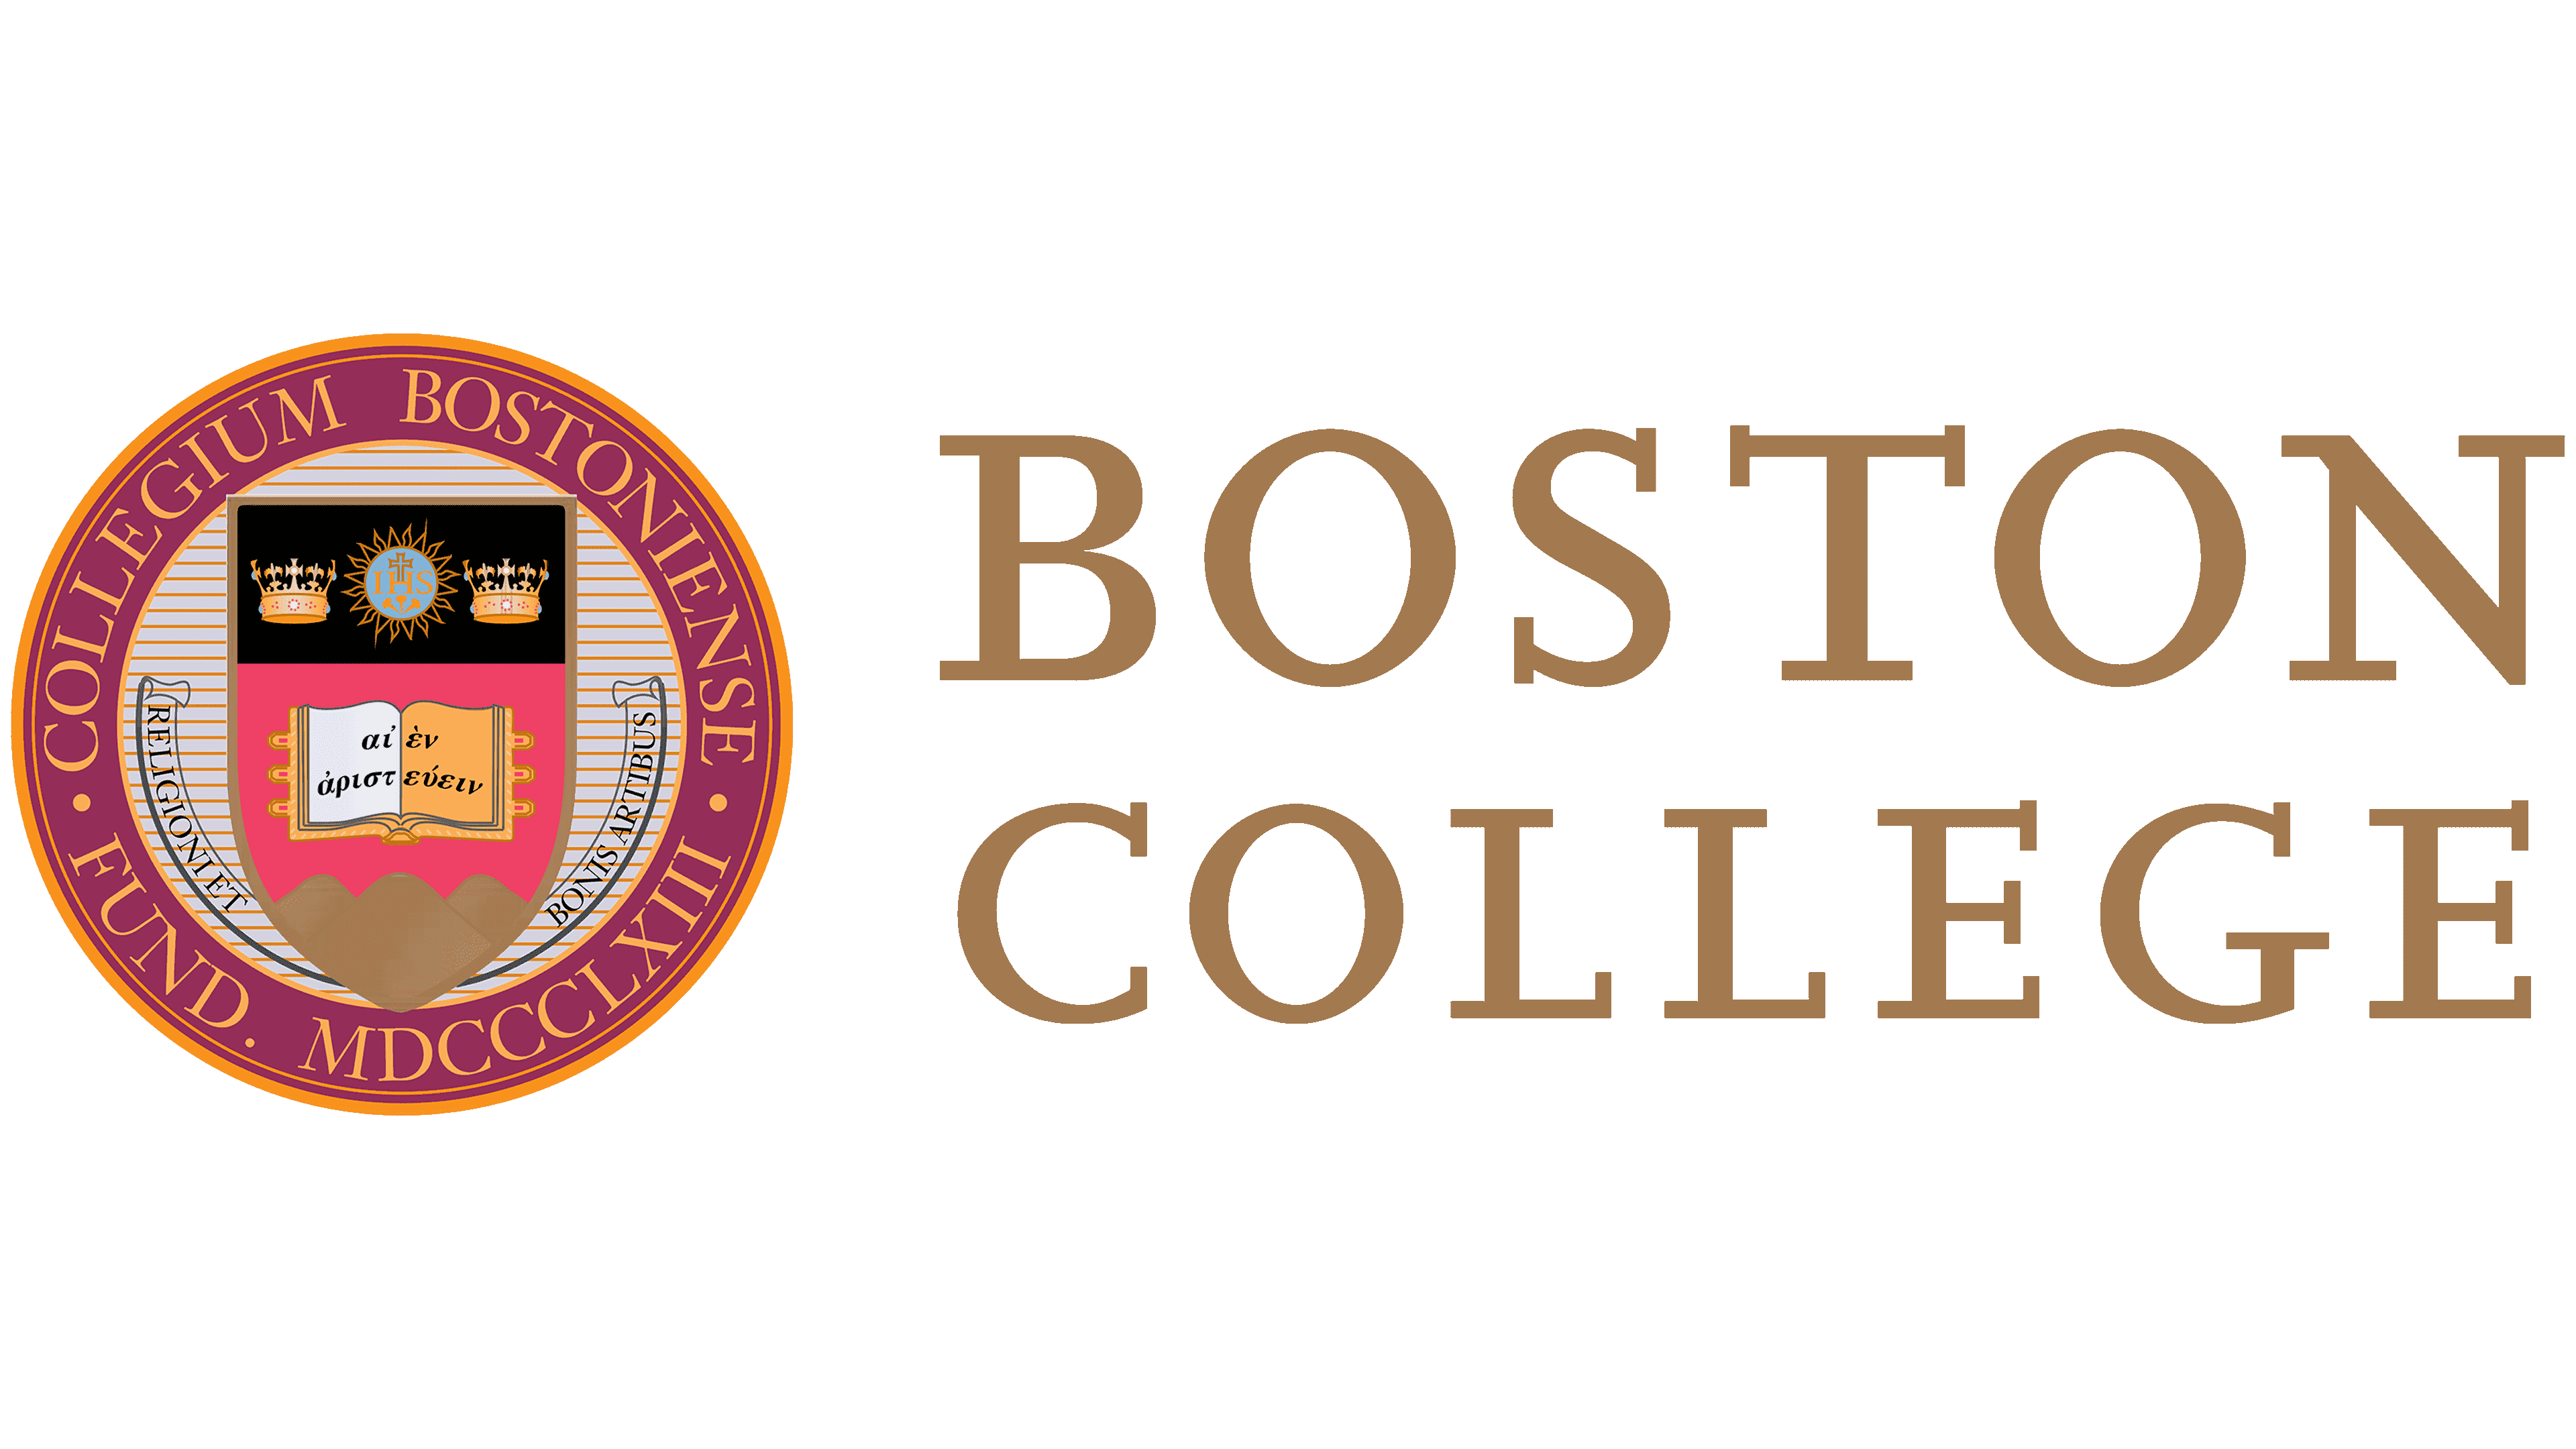 Boston-College-Emblem